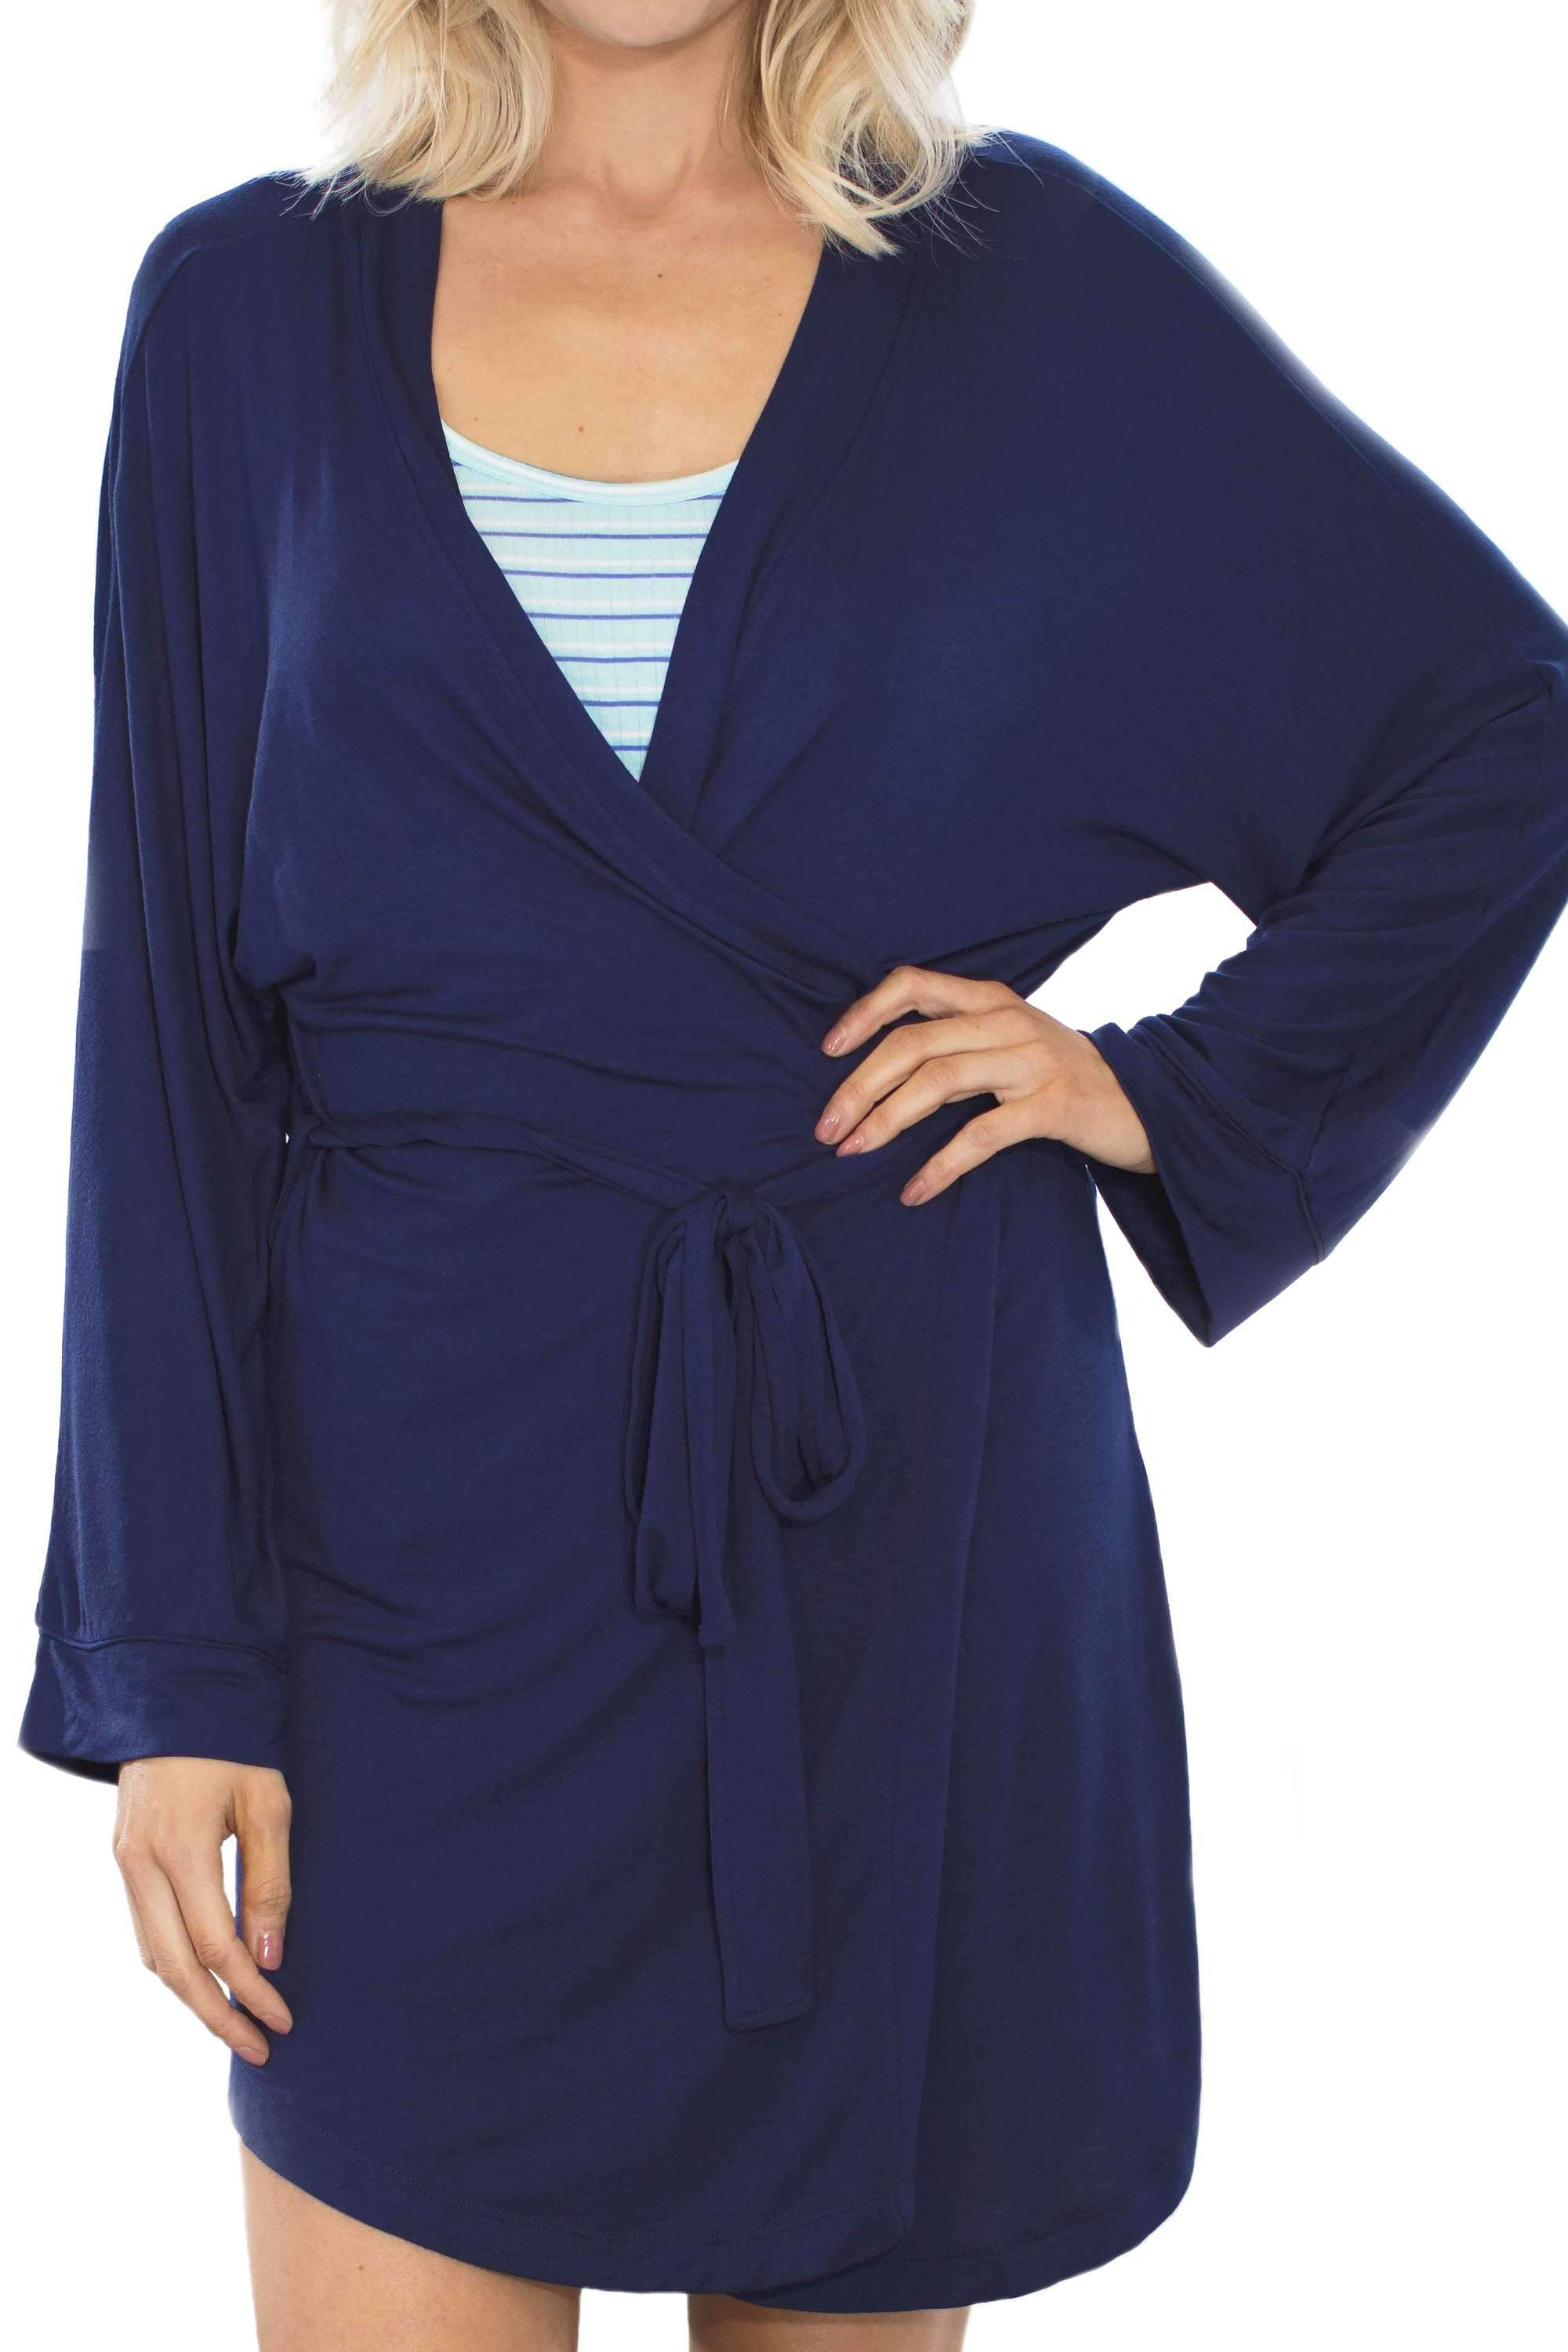 Honeydew Women's All American Robe - Walmart.com